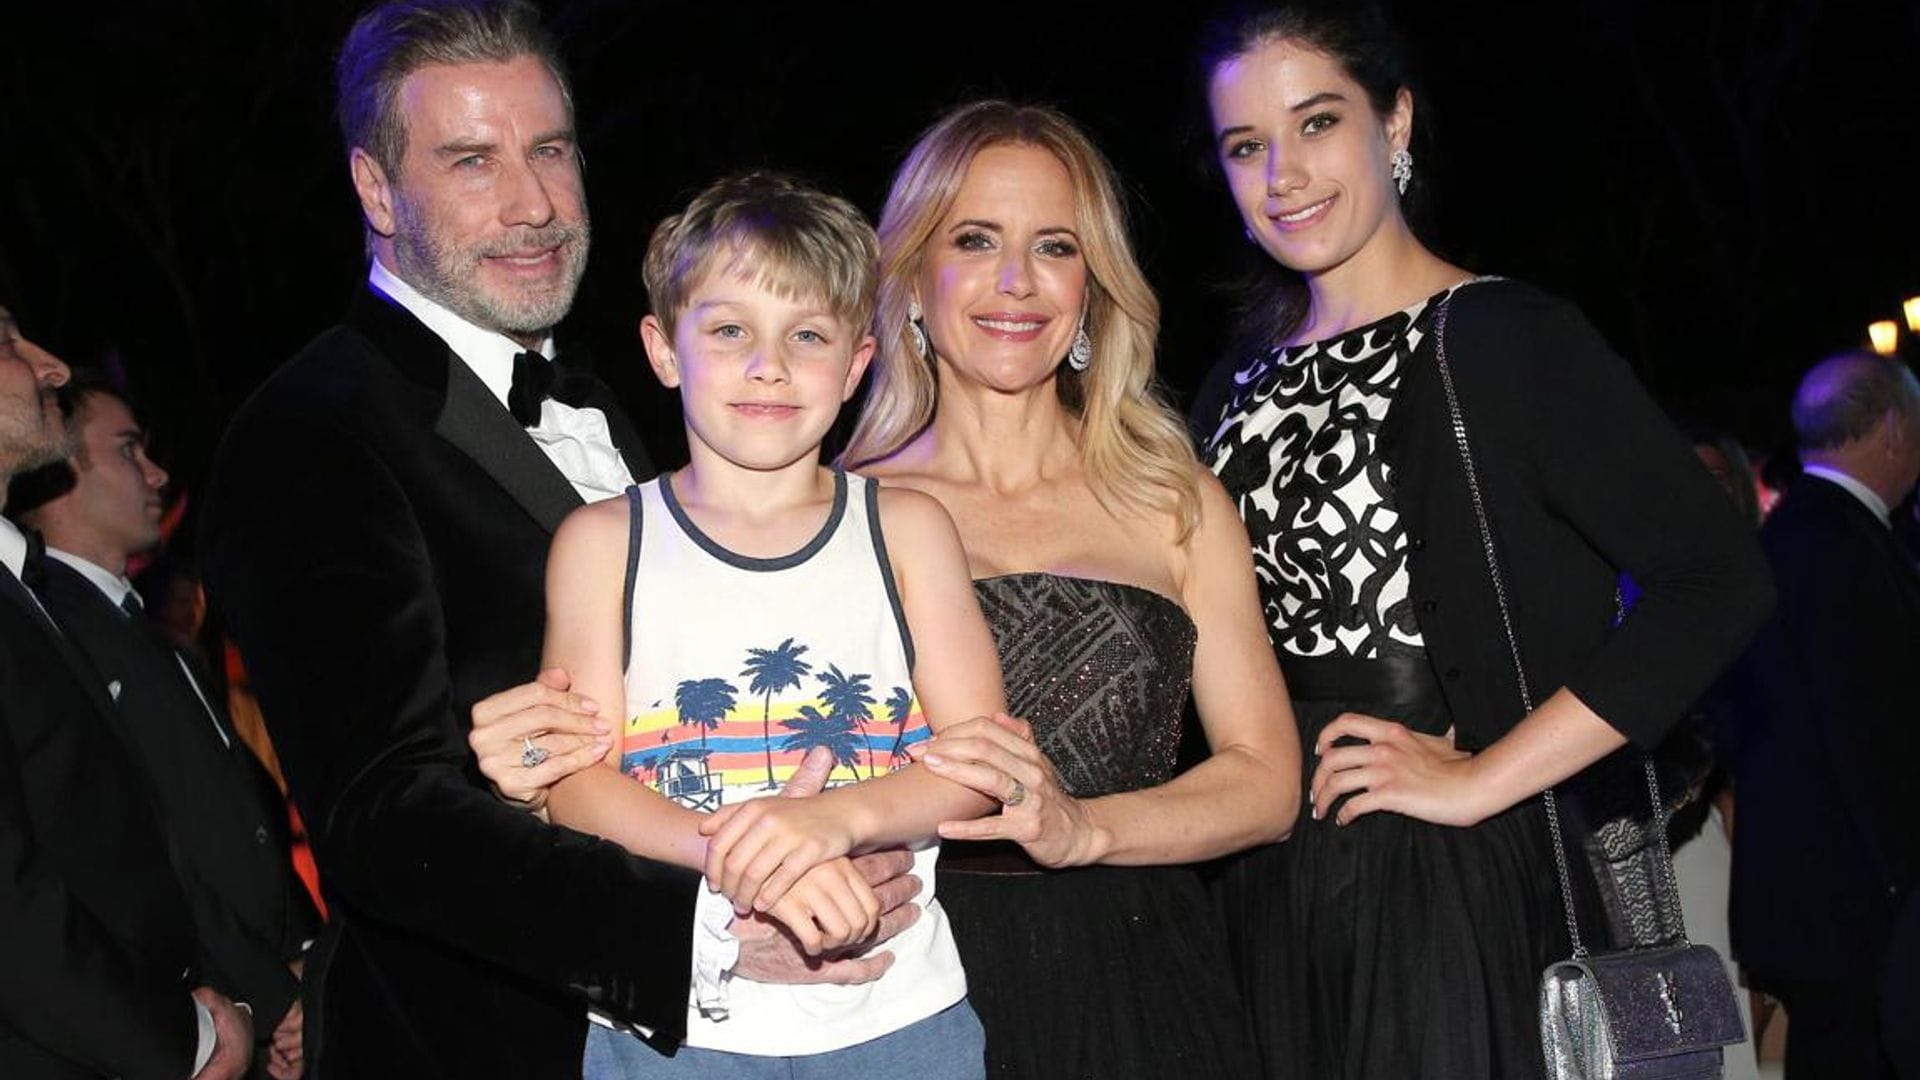 John Travolta shares rare family photo with both of his lookalike kids